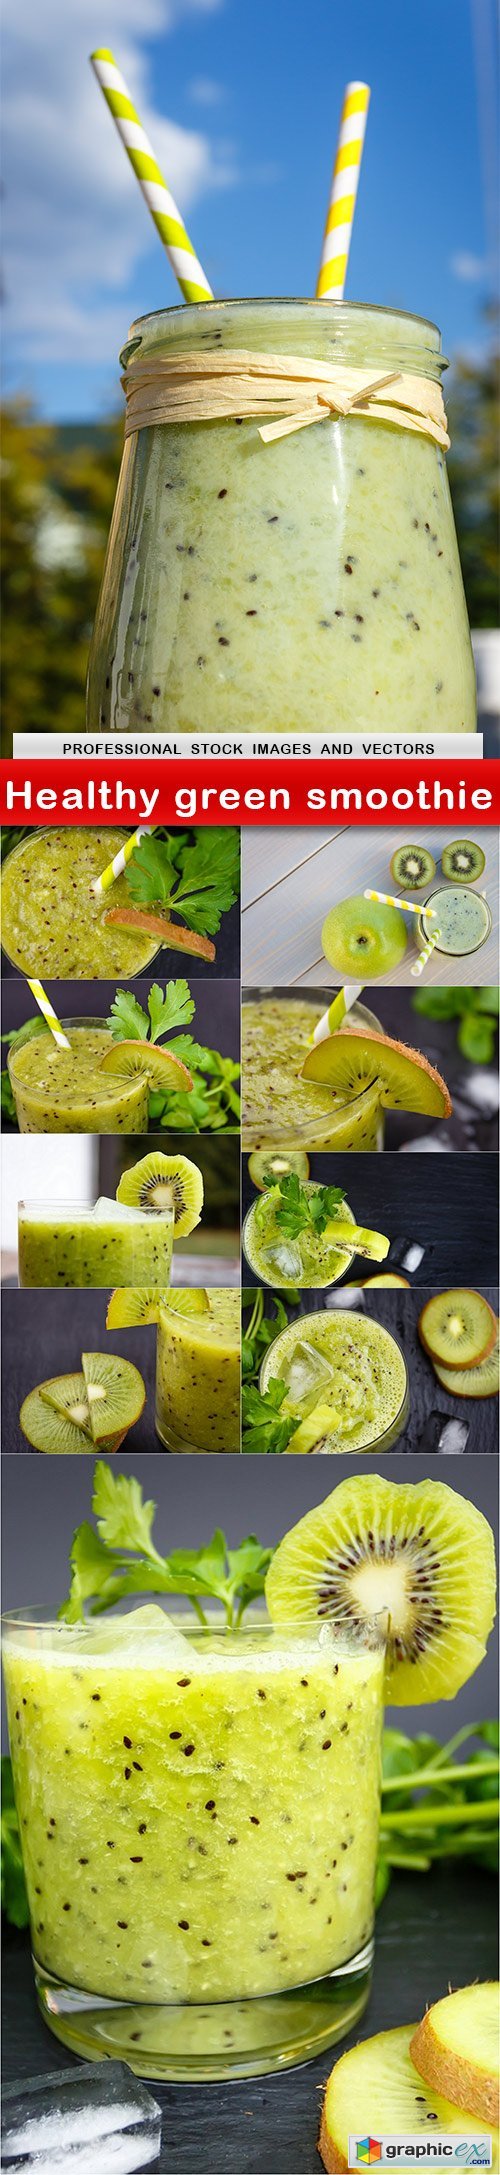 Healthy green smoothie - 10 UHQ JPEG